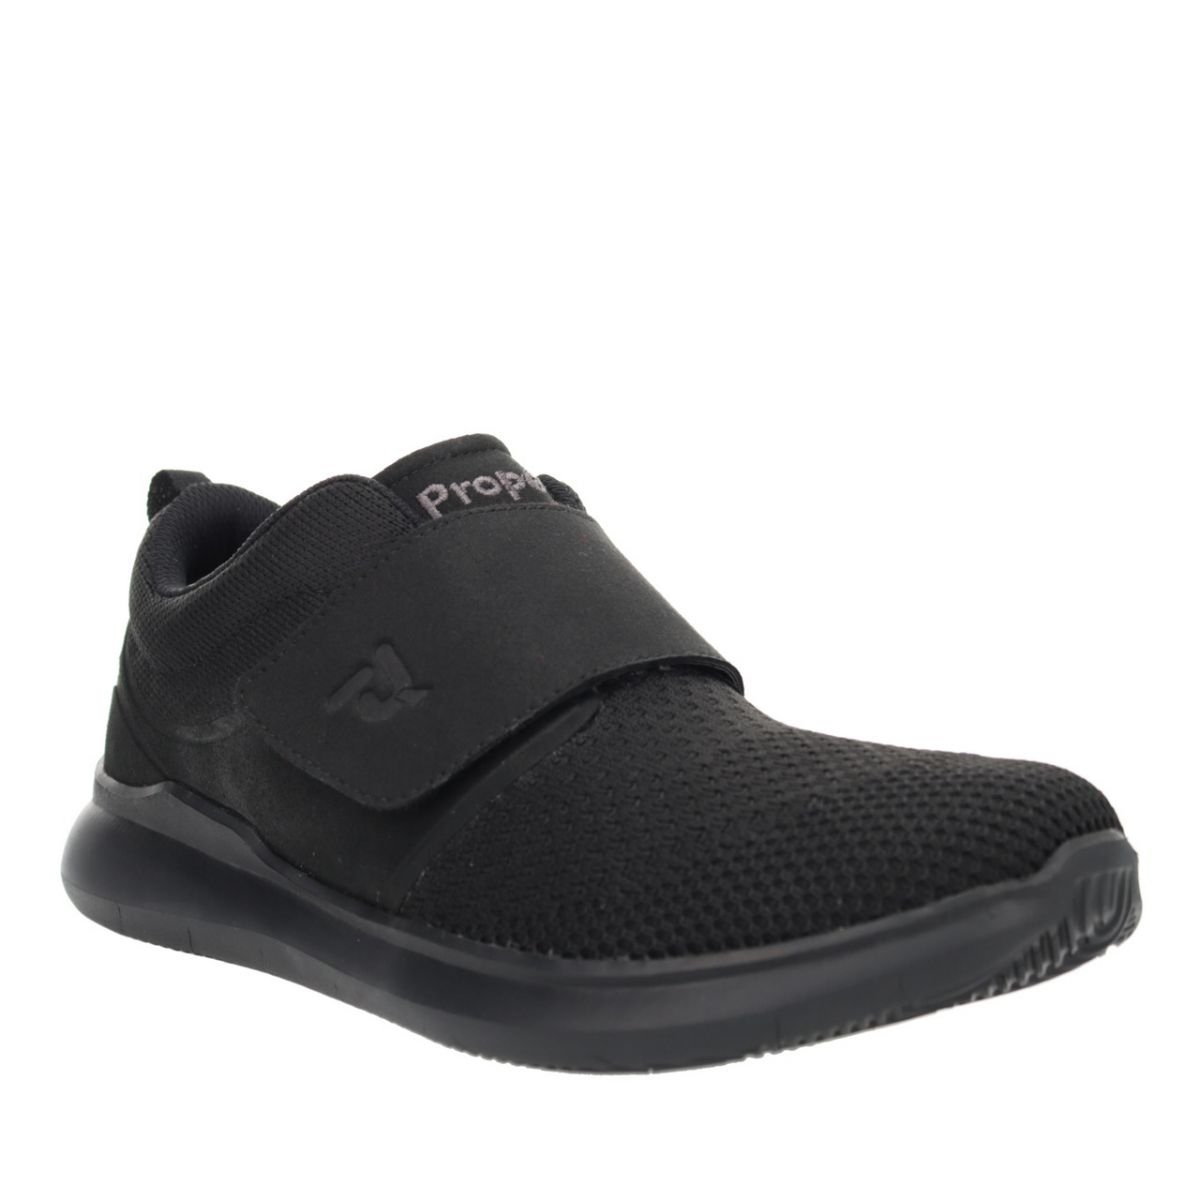 Propet Men's Viator Strap Walking Shoe All Black - MAA073MABL ALL BLACK - ALL BLACK, 11.5 X-Wide